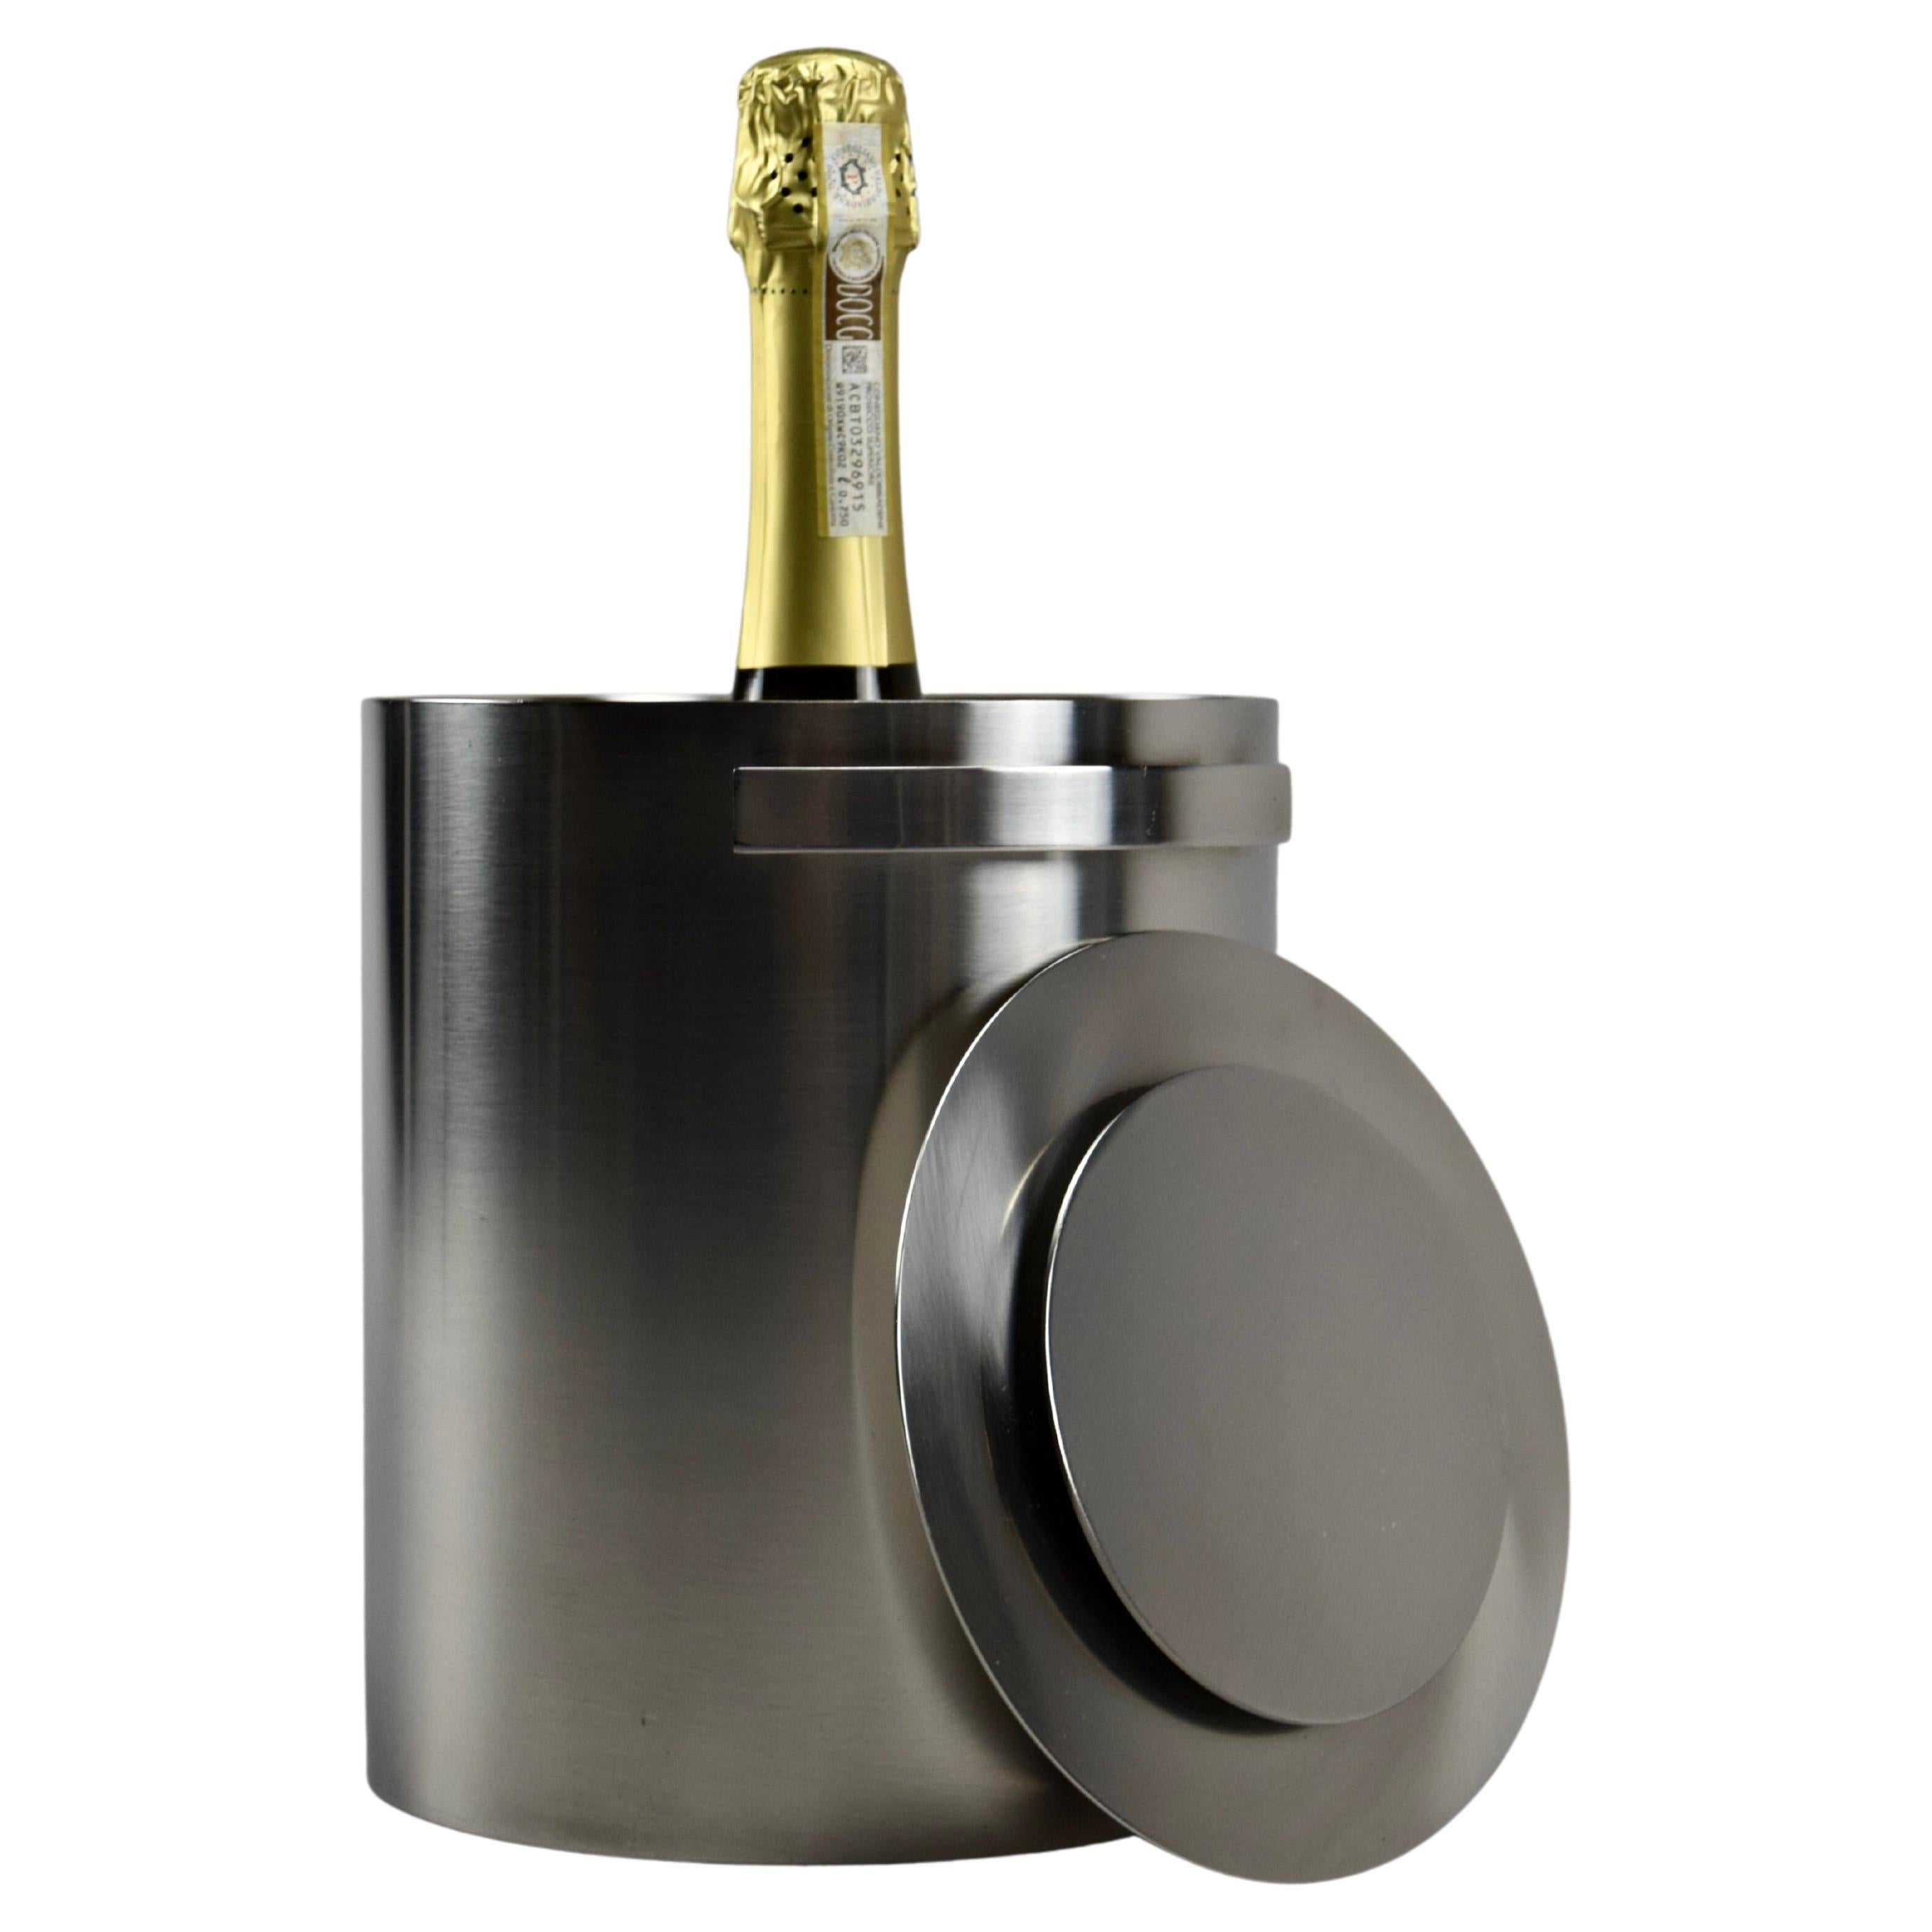 Arne Jacobsen Mid Century Modern Champagne Cooler For Sale